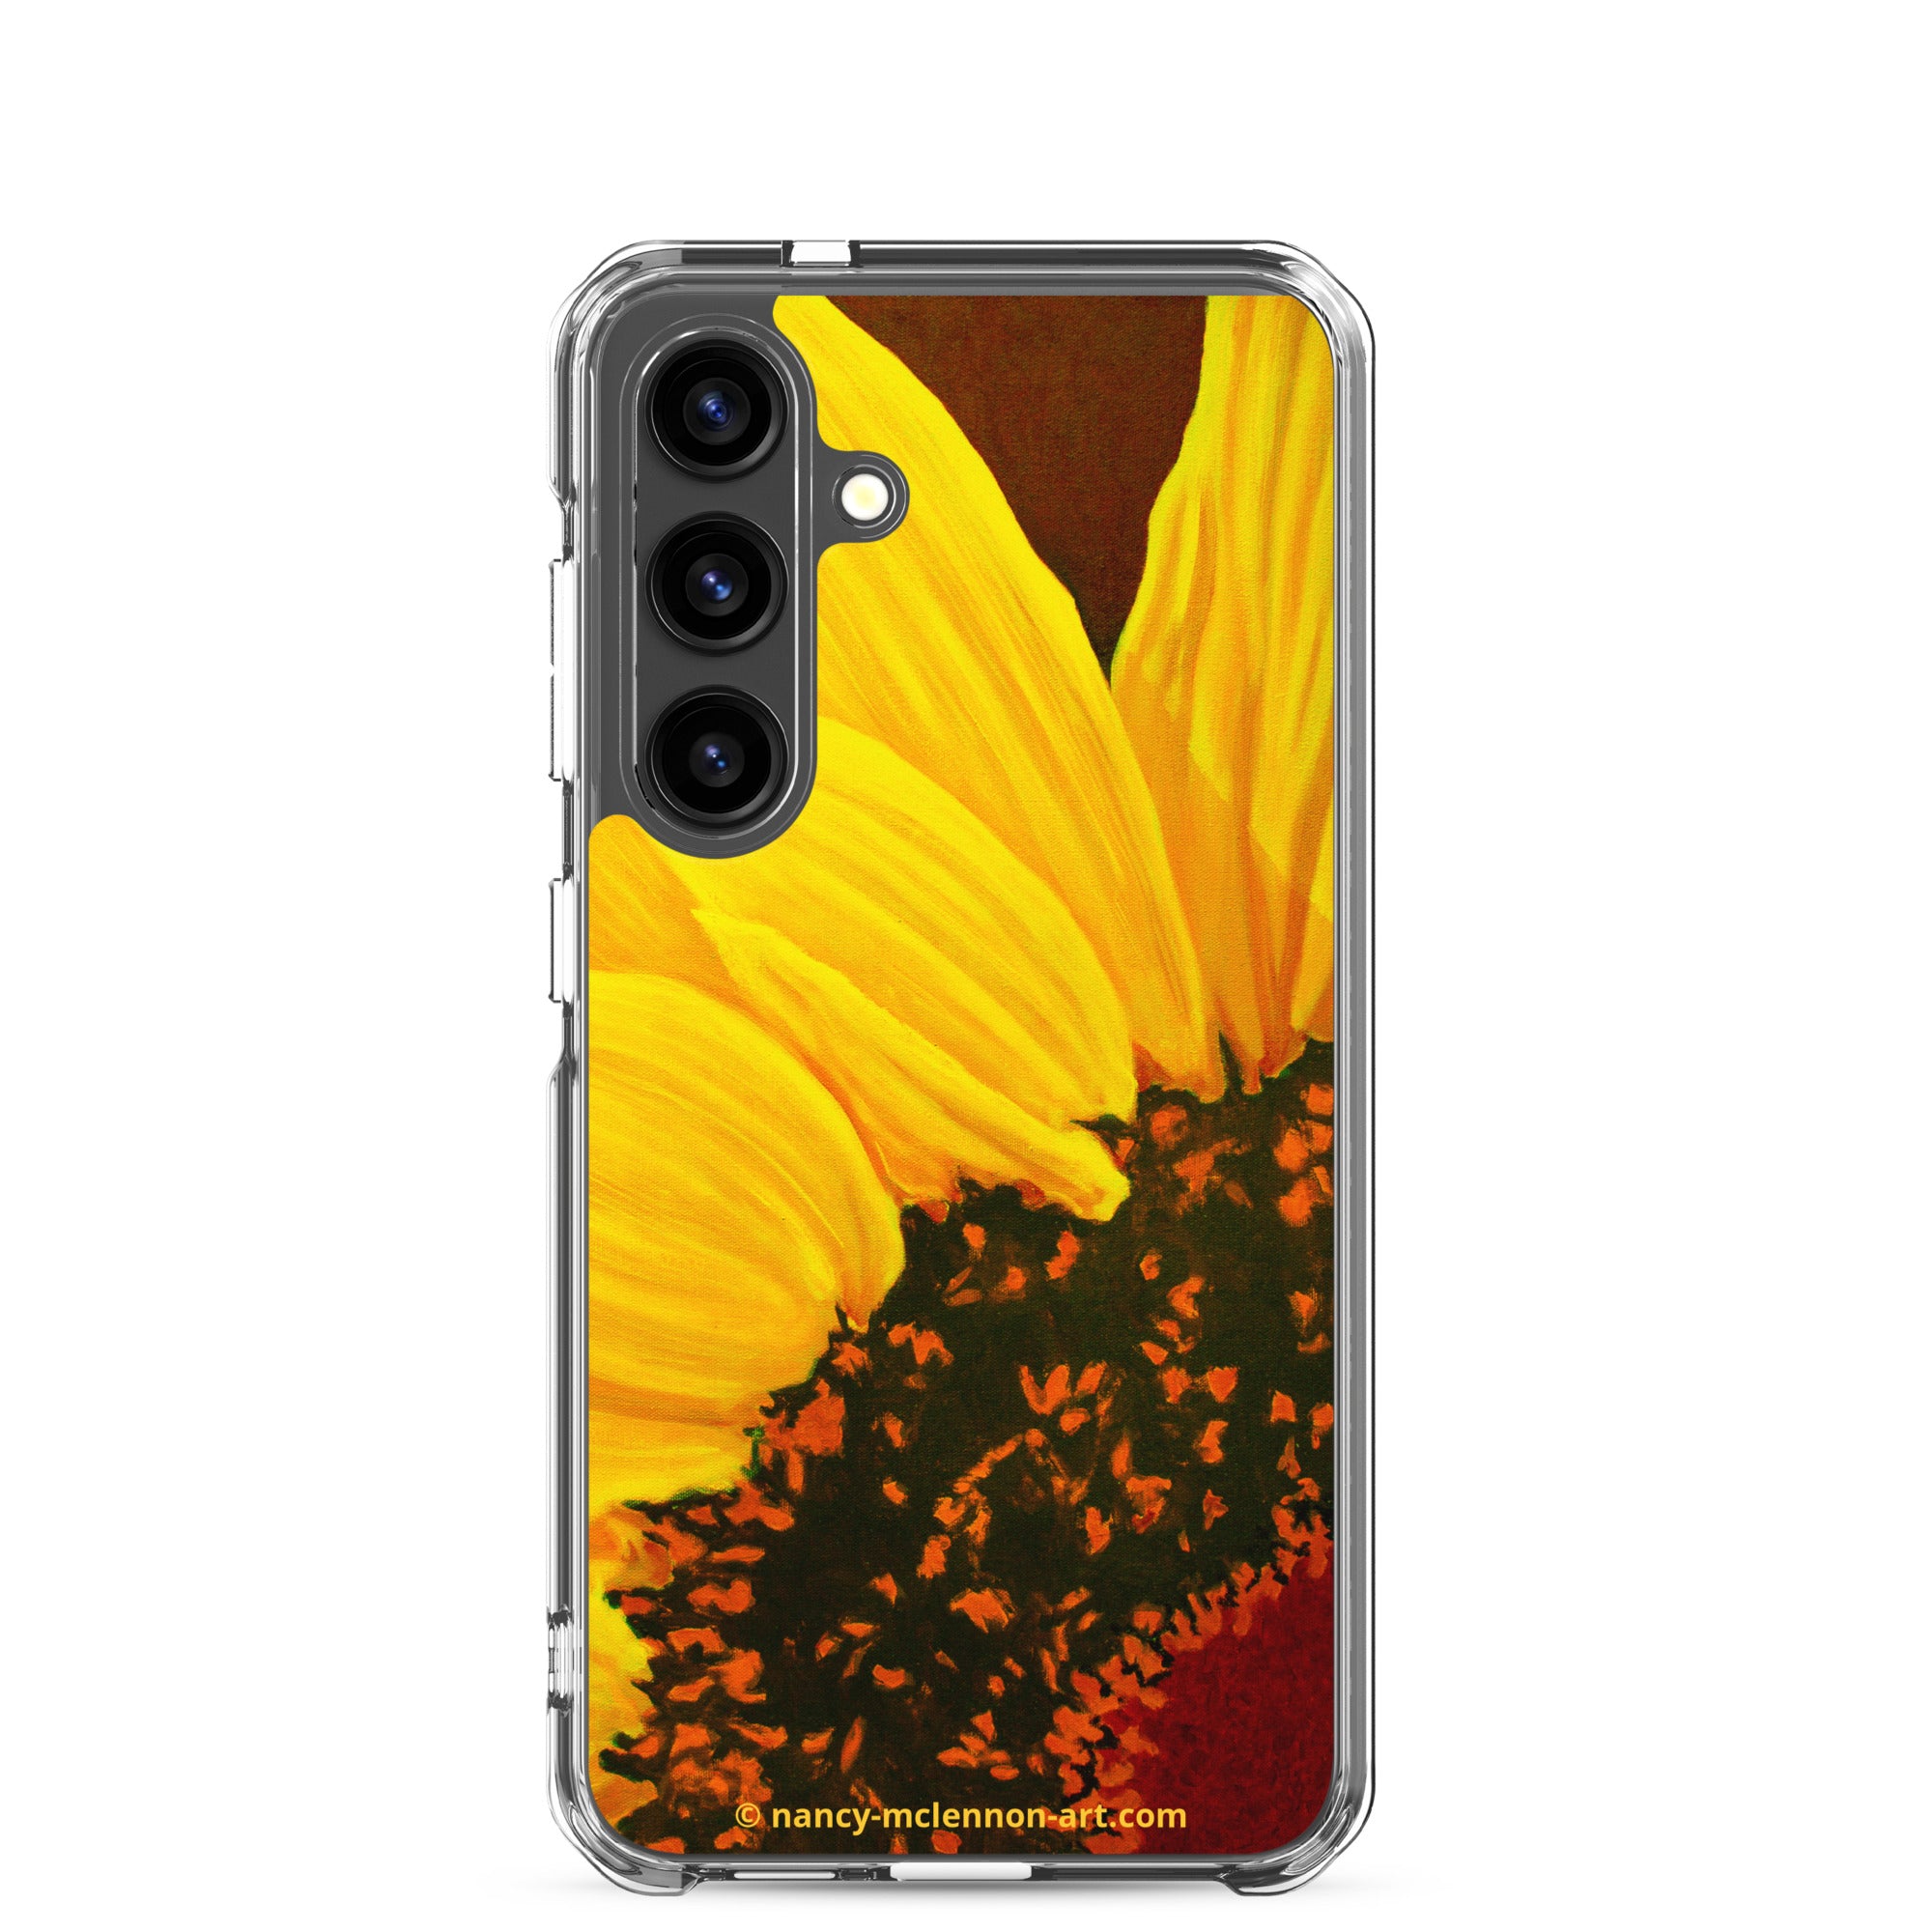 Samsung® Case - Sunflower on purple with red center